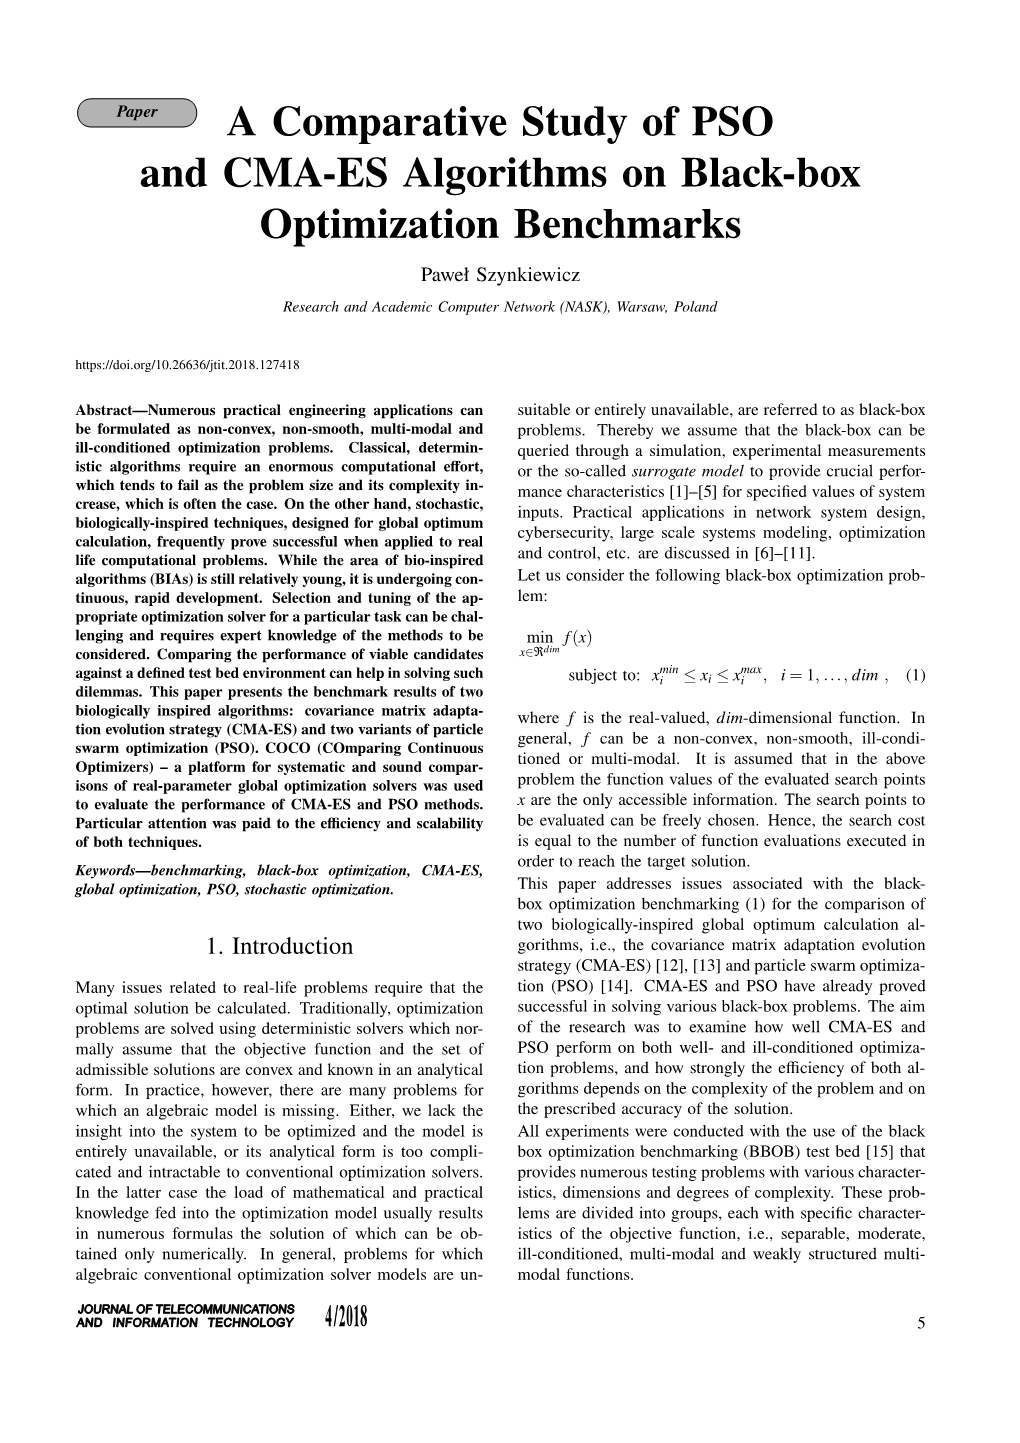 A Comparative Study of PSO and CMA-ES Algorithms on Black-Box Optimization Benchmarks Paweł Szynkiewicz Research and Academic Computer Network (NASK), Warsaw, Poland